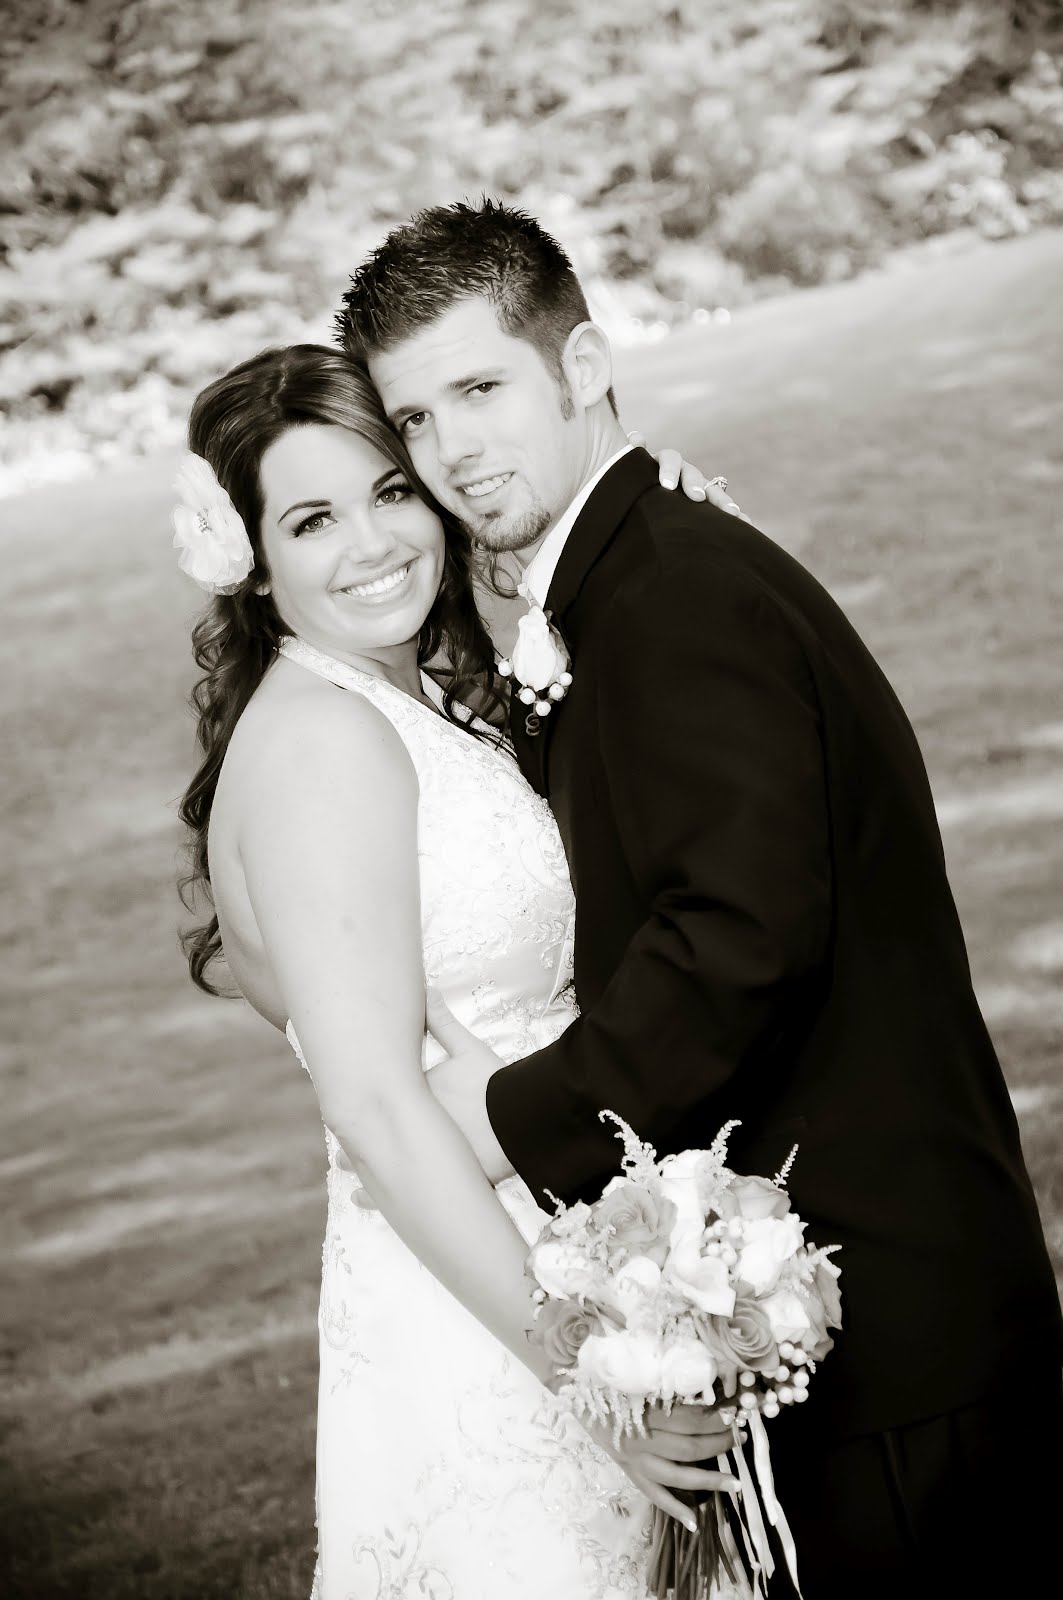 Ashley Stone Photography: Brandon and Ashley's Wedding 5.19.12